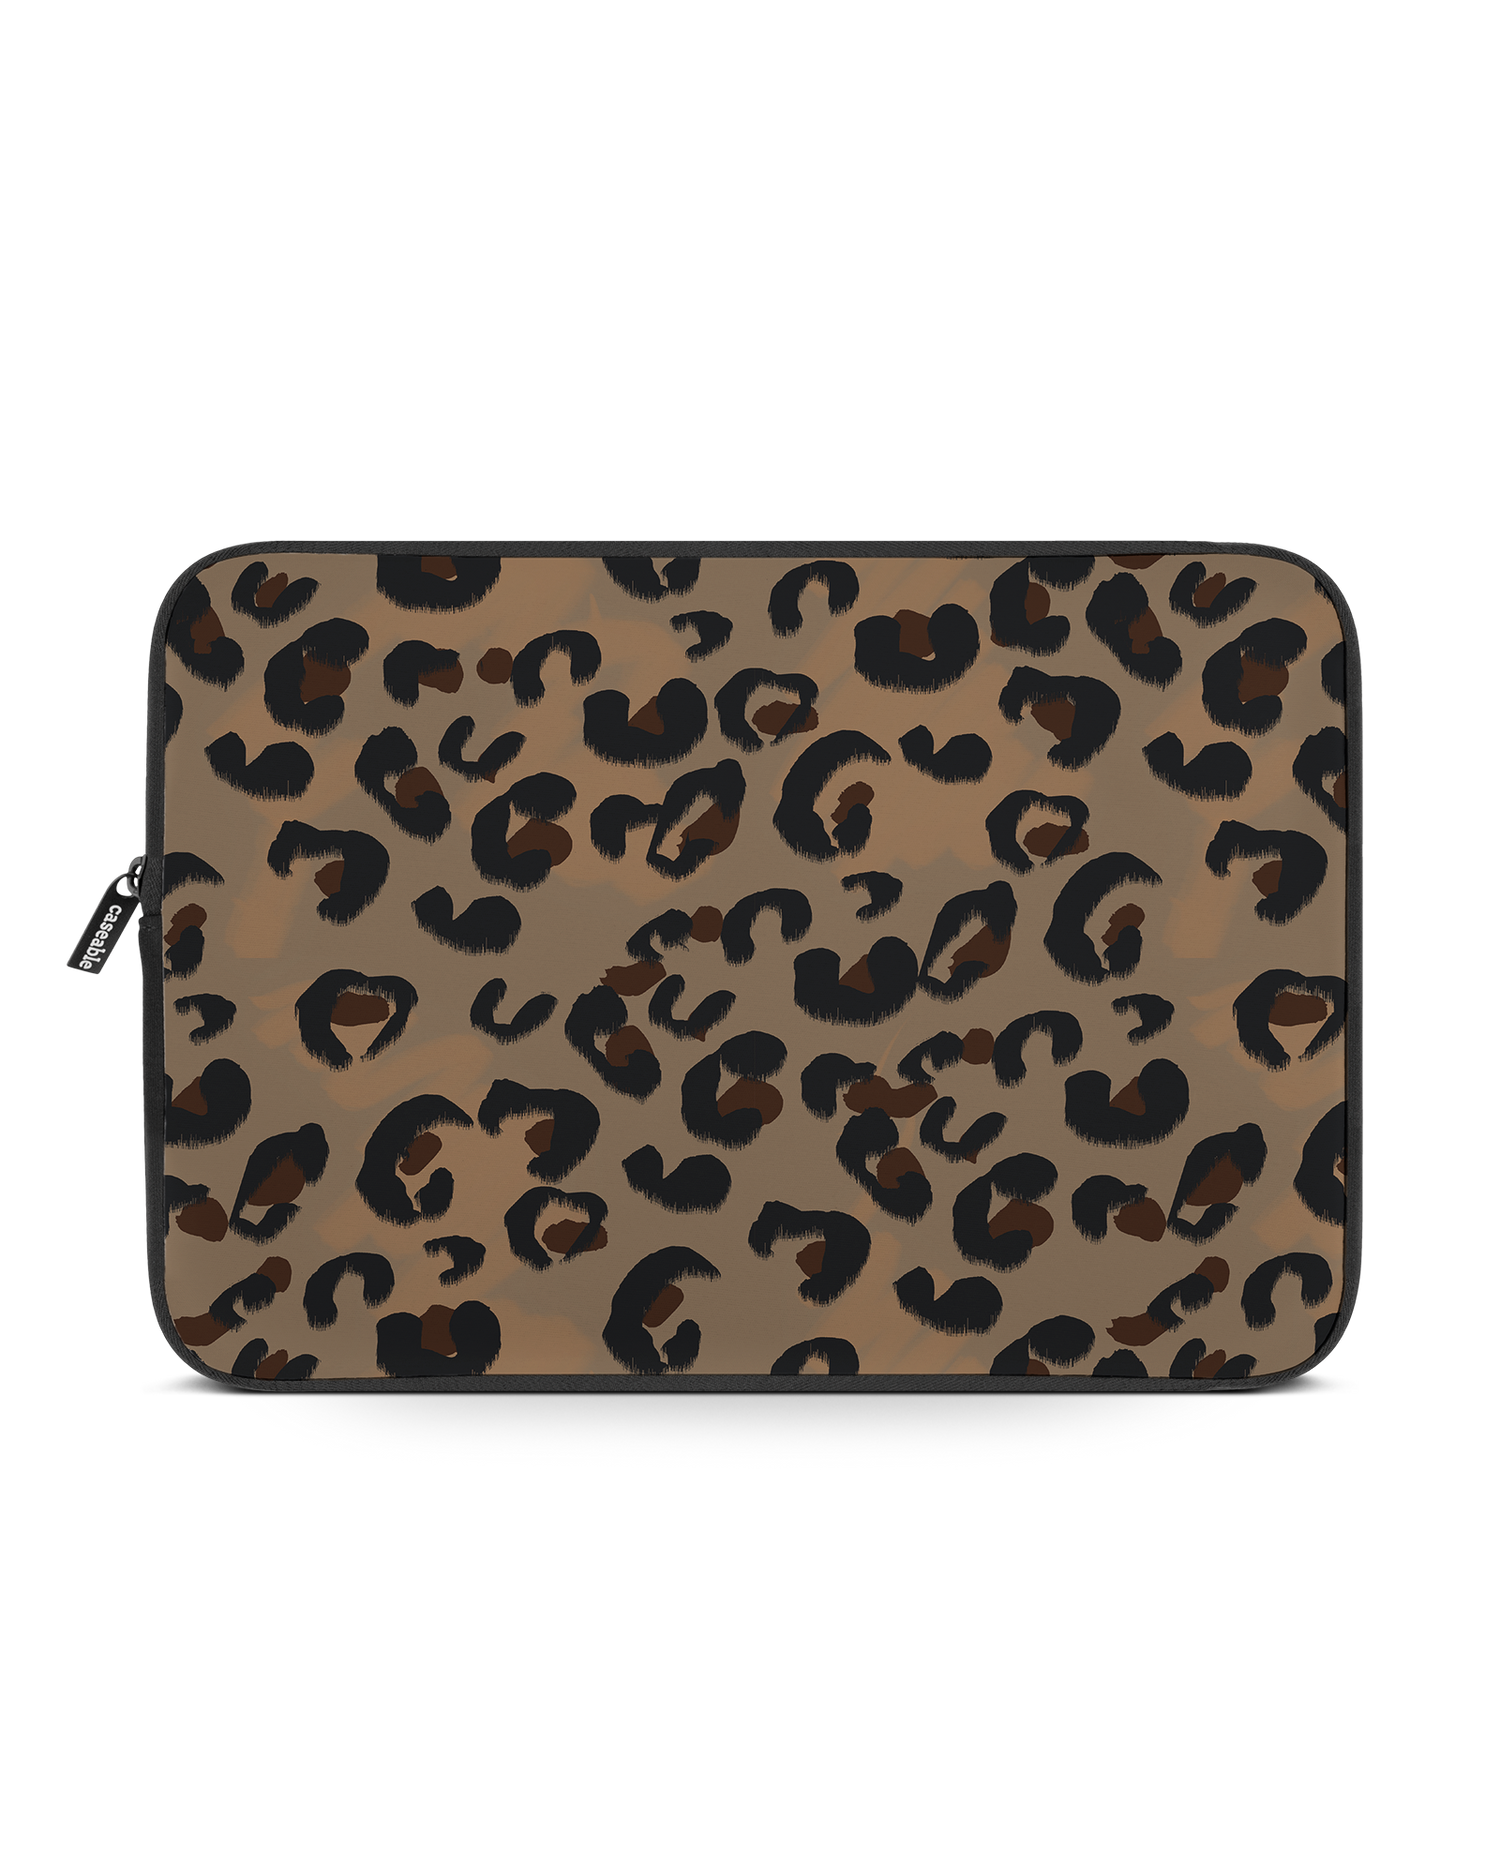 Leopard Repeat Laptop Case 15-16 inch: Front View